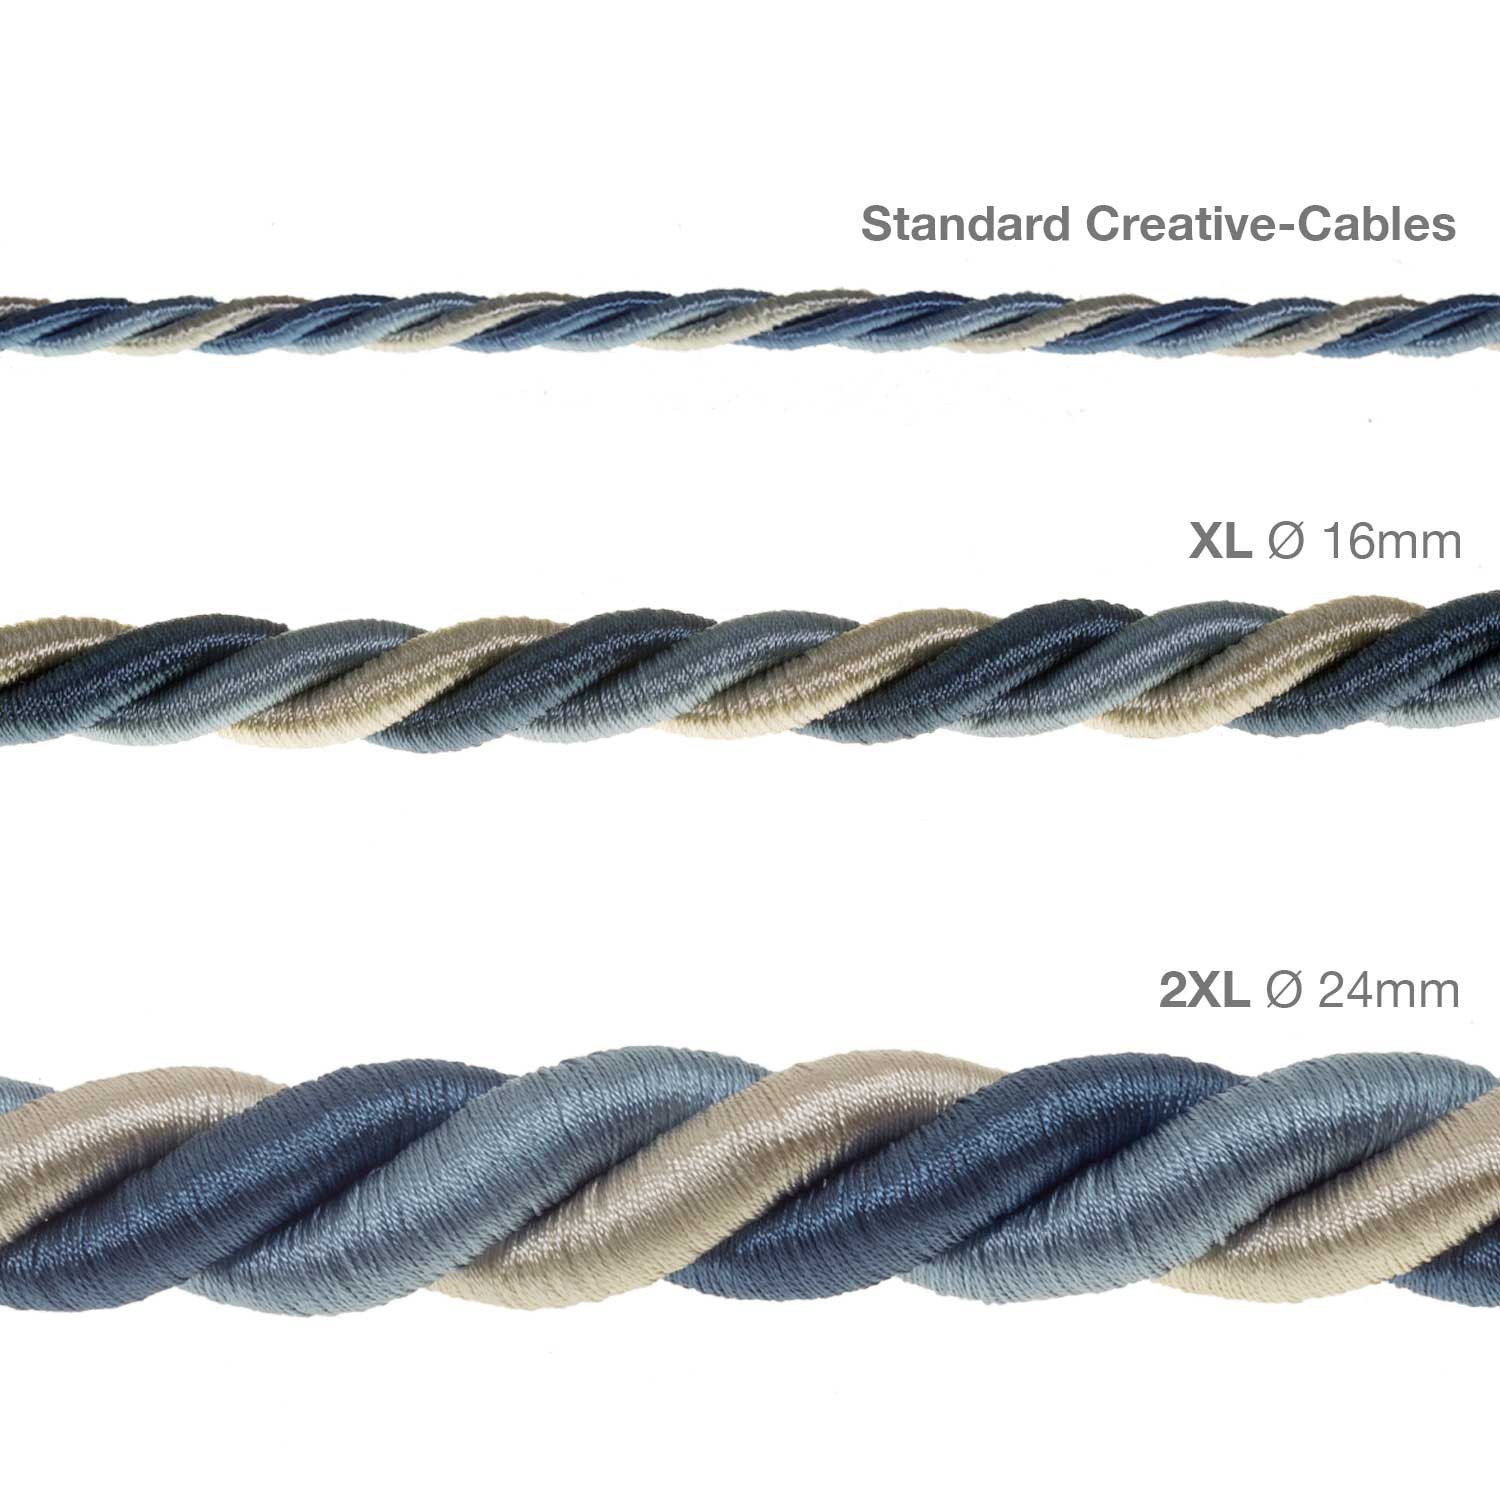 Cordon 2XL, cable eléctrico 3x0,75. Revestimiento de tejido lucído Bernadotte. Diámetro: 24mm.